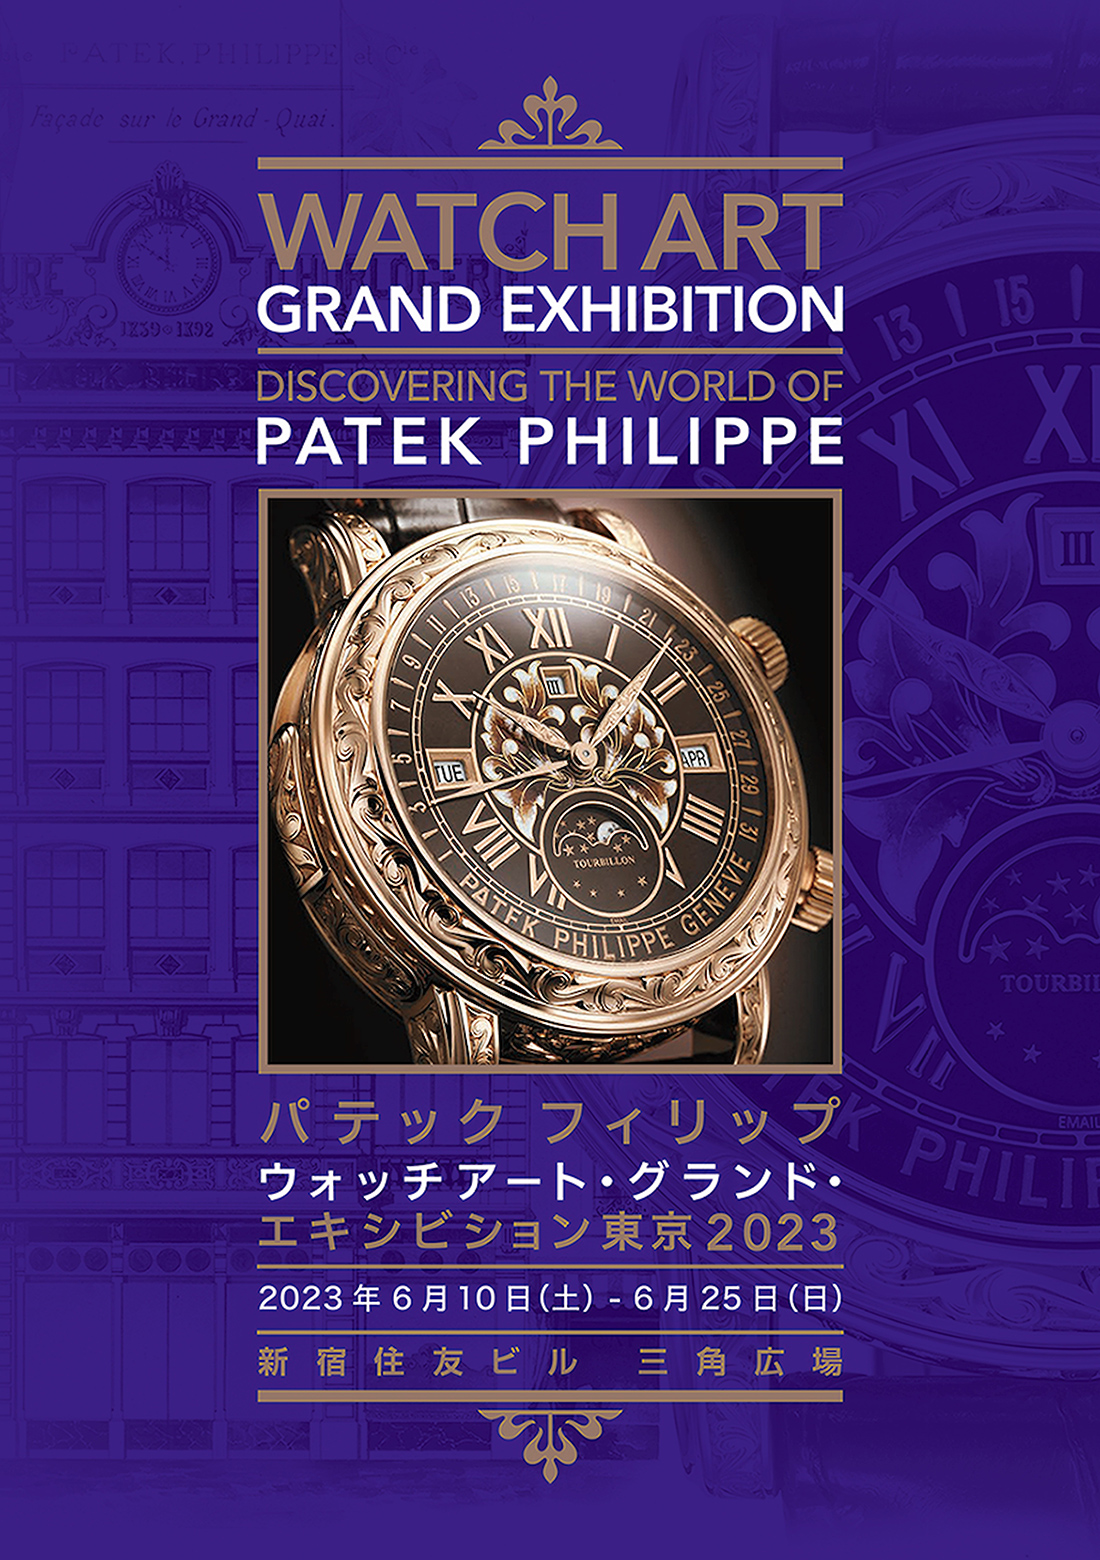 Patek Philippe Watch Art Grand Exhibition